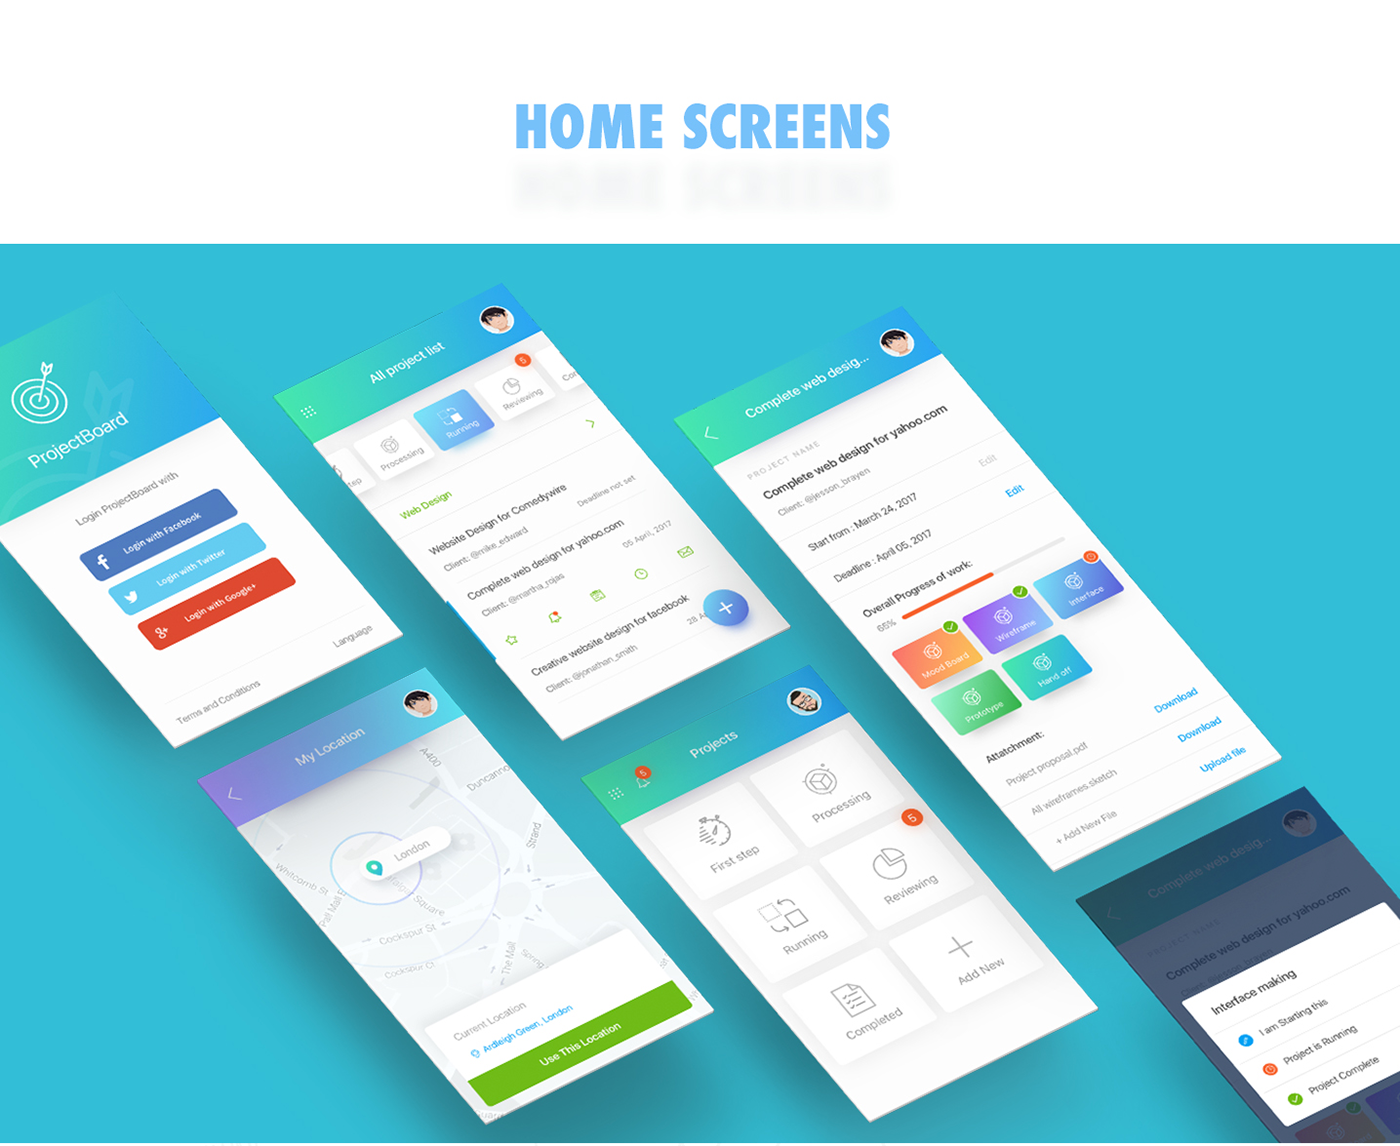 UI ux project board app design best design Behance google template